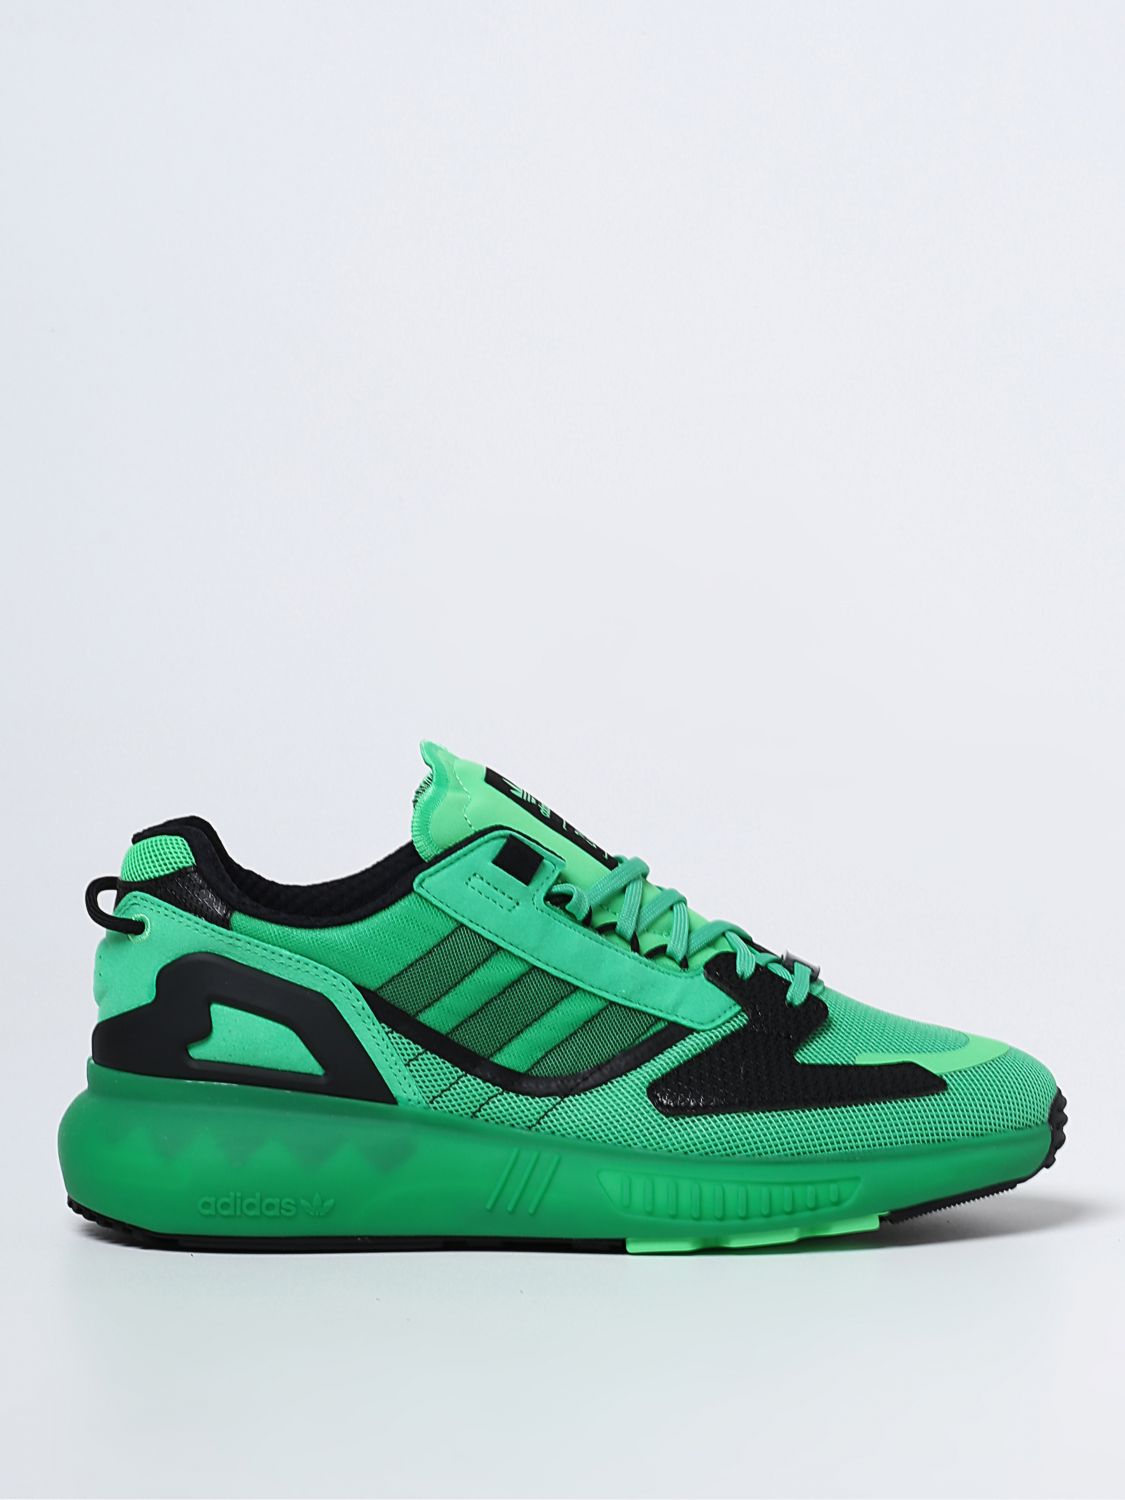 Adidas uomo | Collezione Adidas Uomo Primavera Estate 2022 online صبع